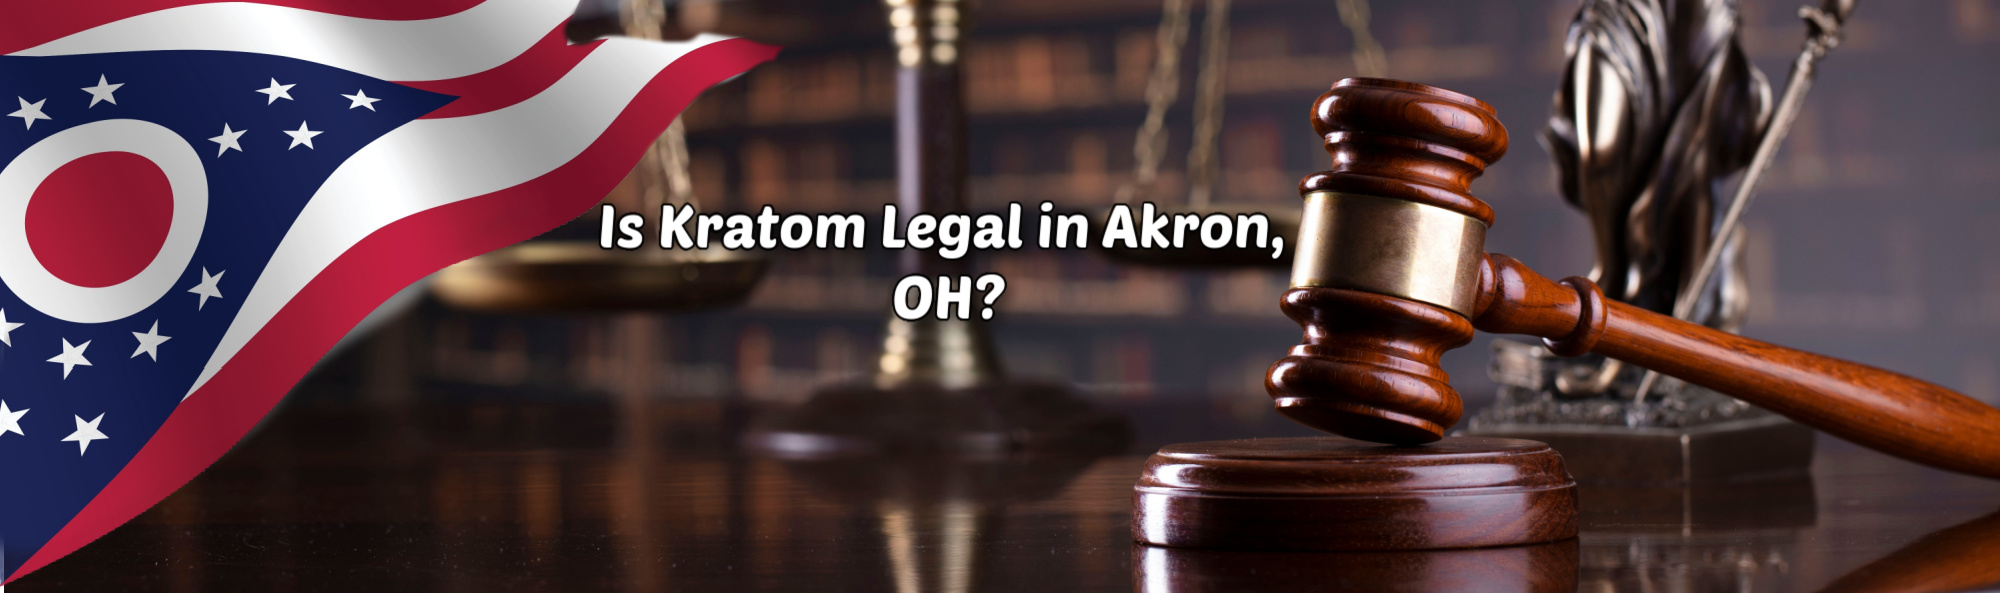 image of is kratom legal in akron oh